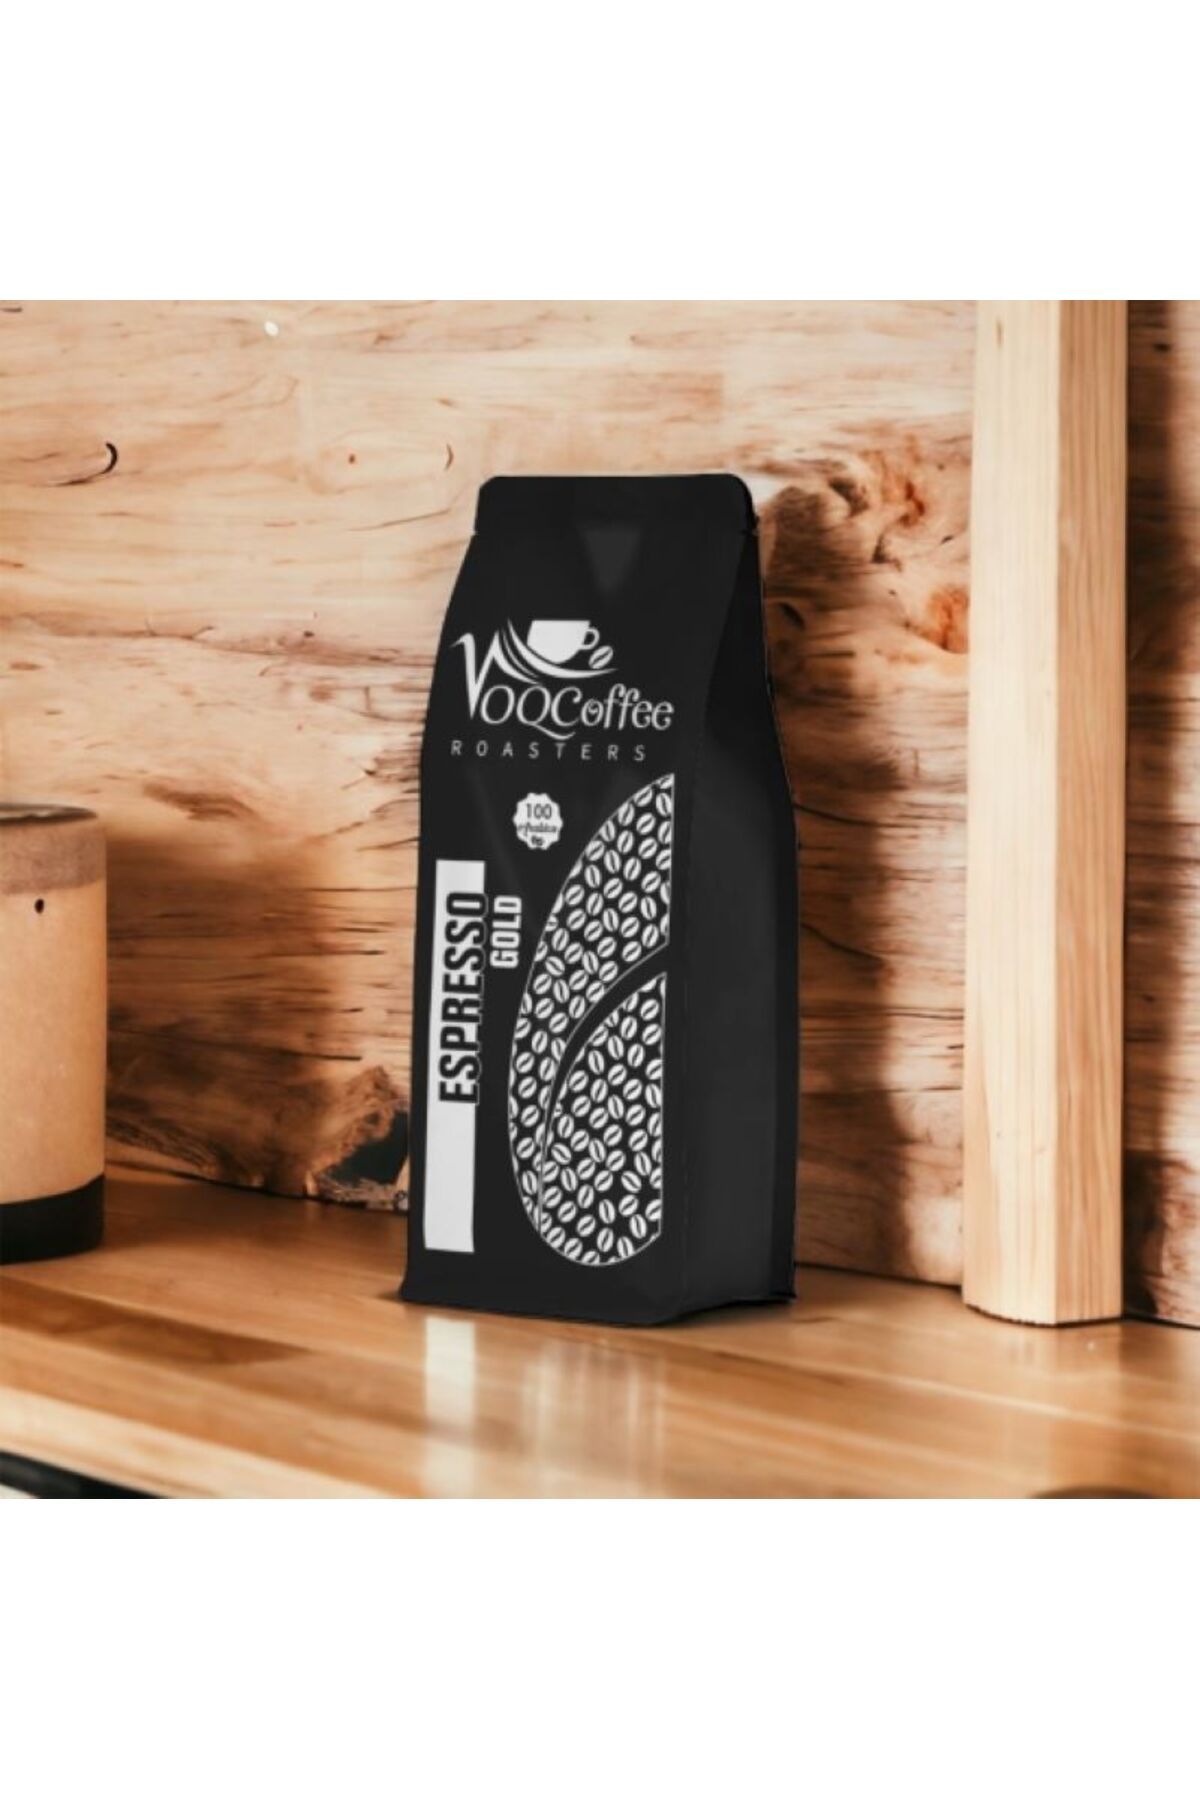 Voq Coffee Roasters Espresso Gold 1000GR